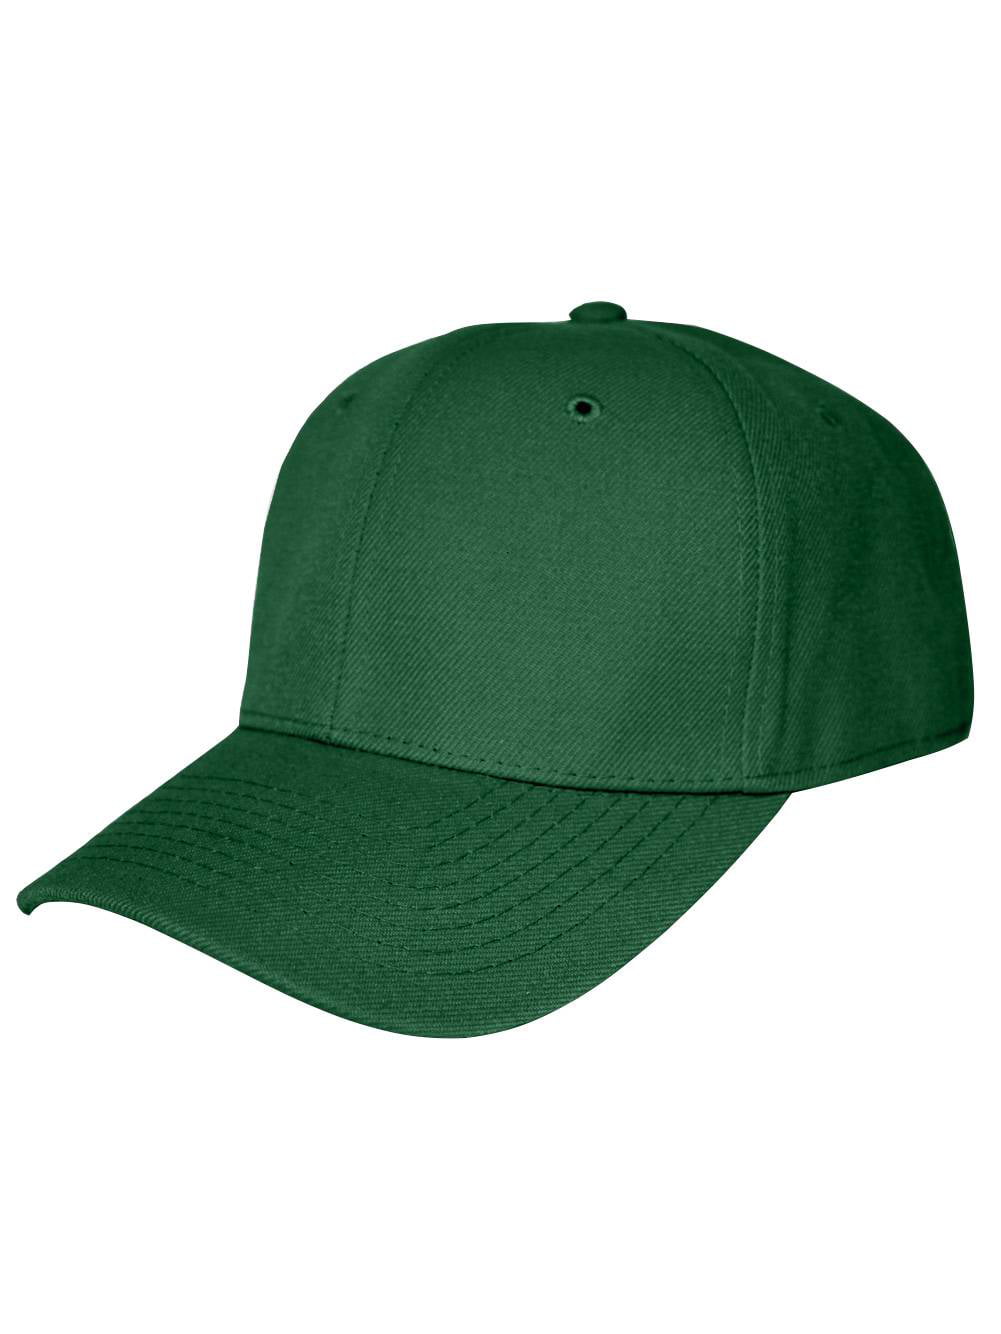 DECKY Orgianl Forest Green Fitted Baseball Caps Size Cap 7-1/2